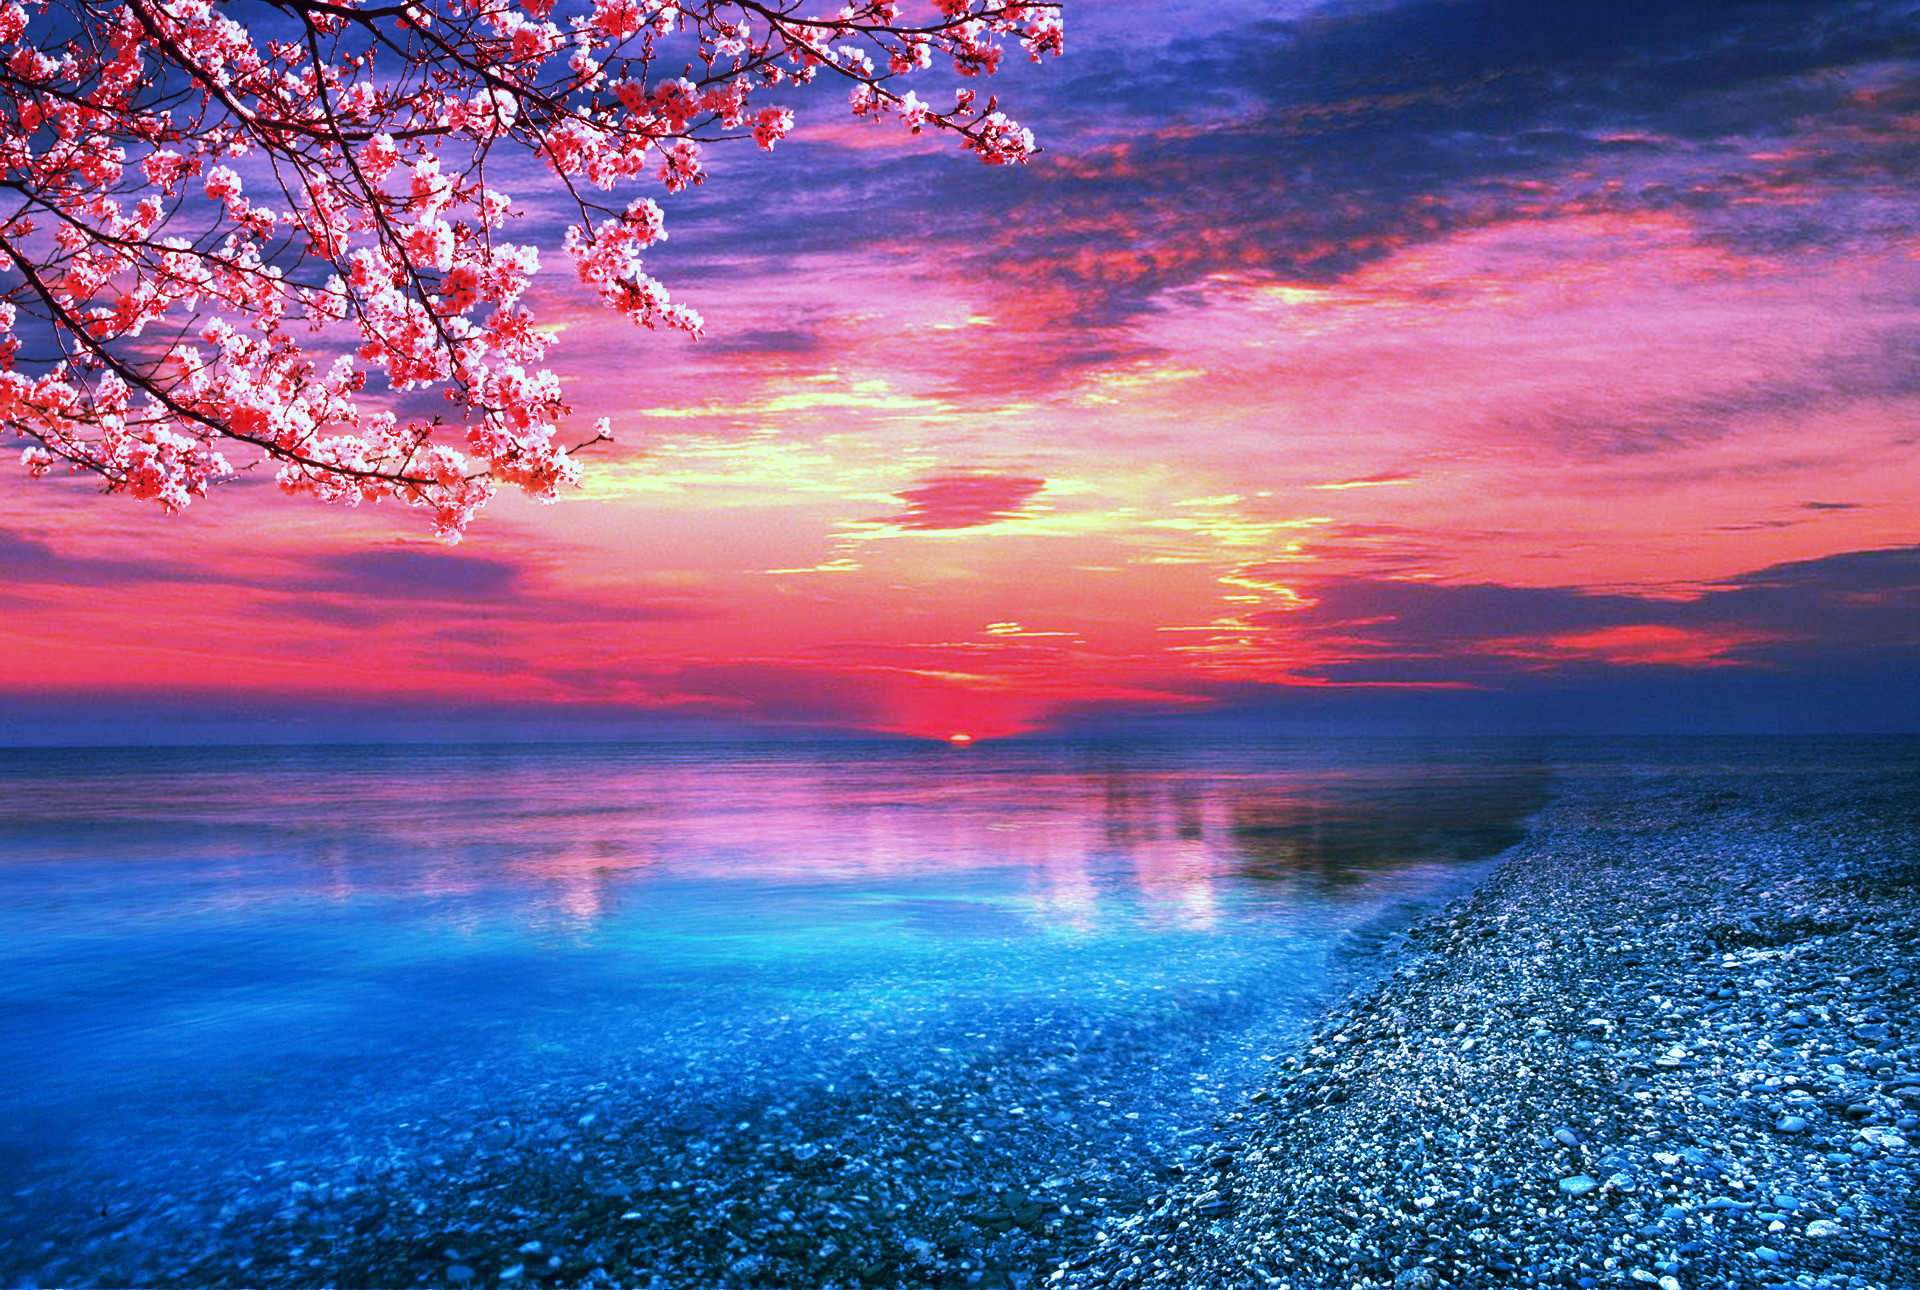 1920x1290 dark sunset hd | 2560x1440 Sunset Clouds & Dark Ocean desktop PC and Mac  wallpaper | Dark and Beautiful | Pinterest | Mac wallpaper, Ocean wallpaper  and ...